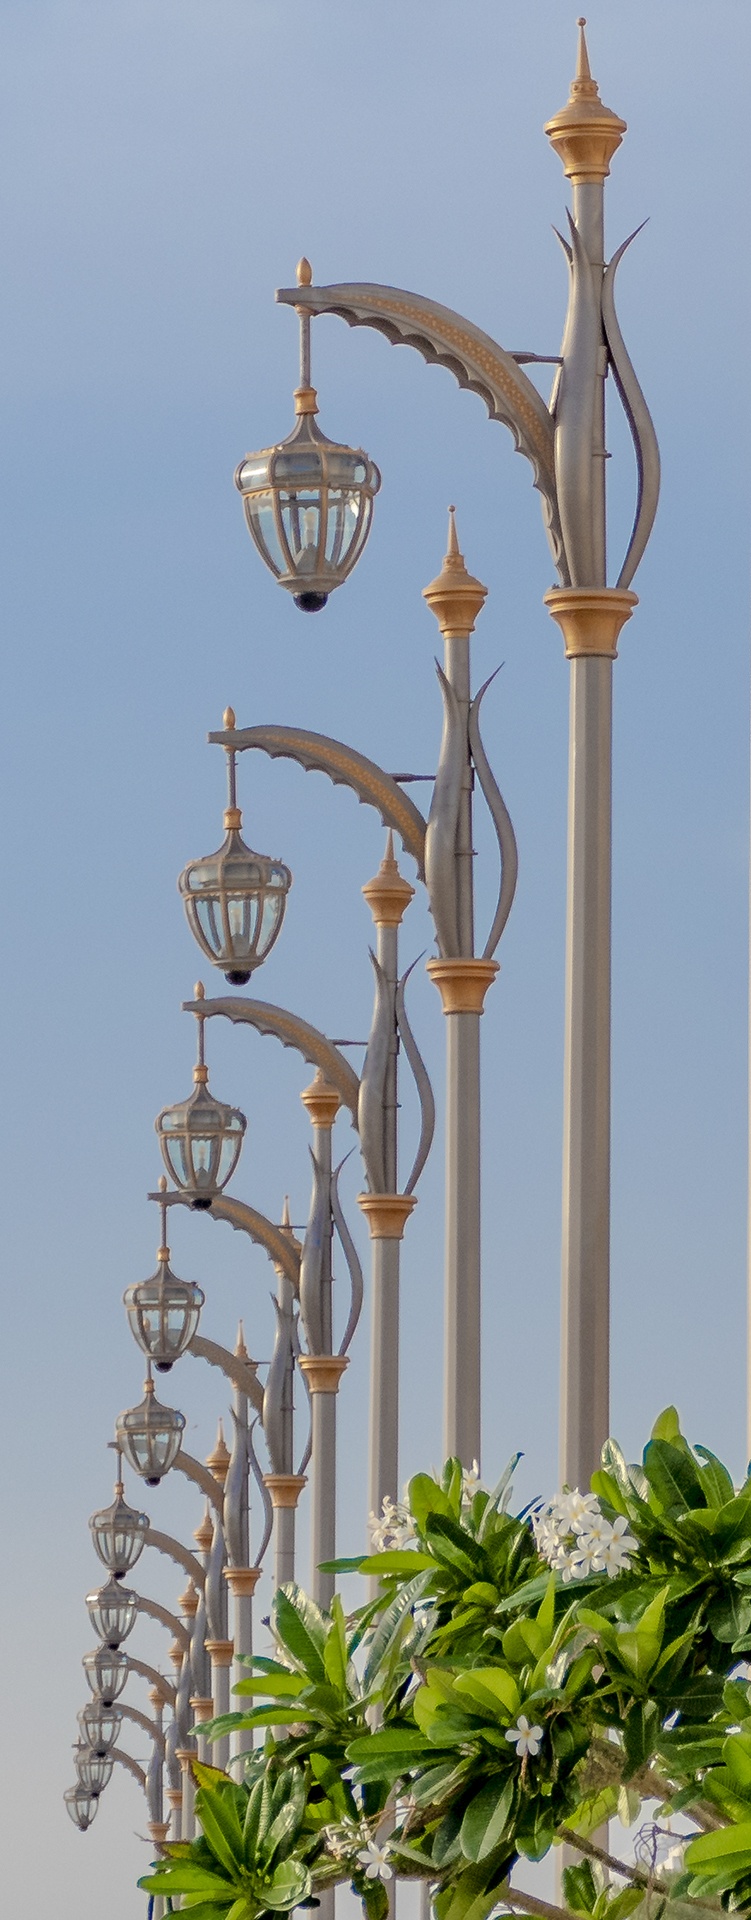 Presidential Palace Qasr Al Watan Palace, Abu Dhabi 2